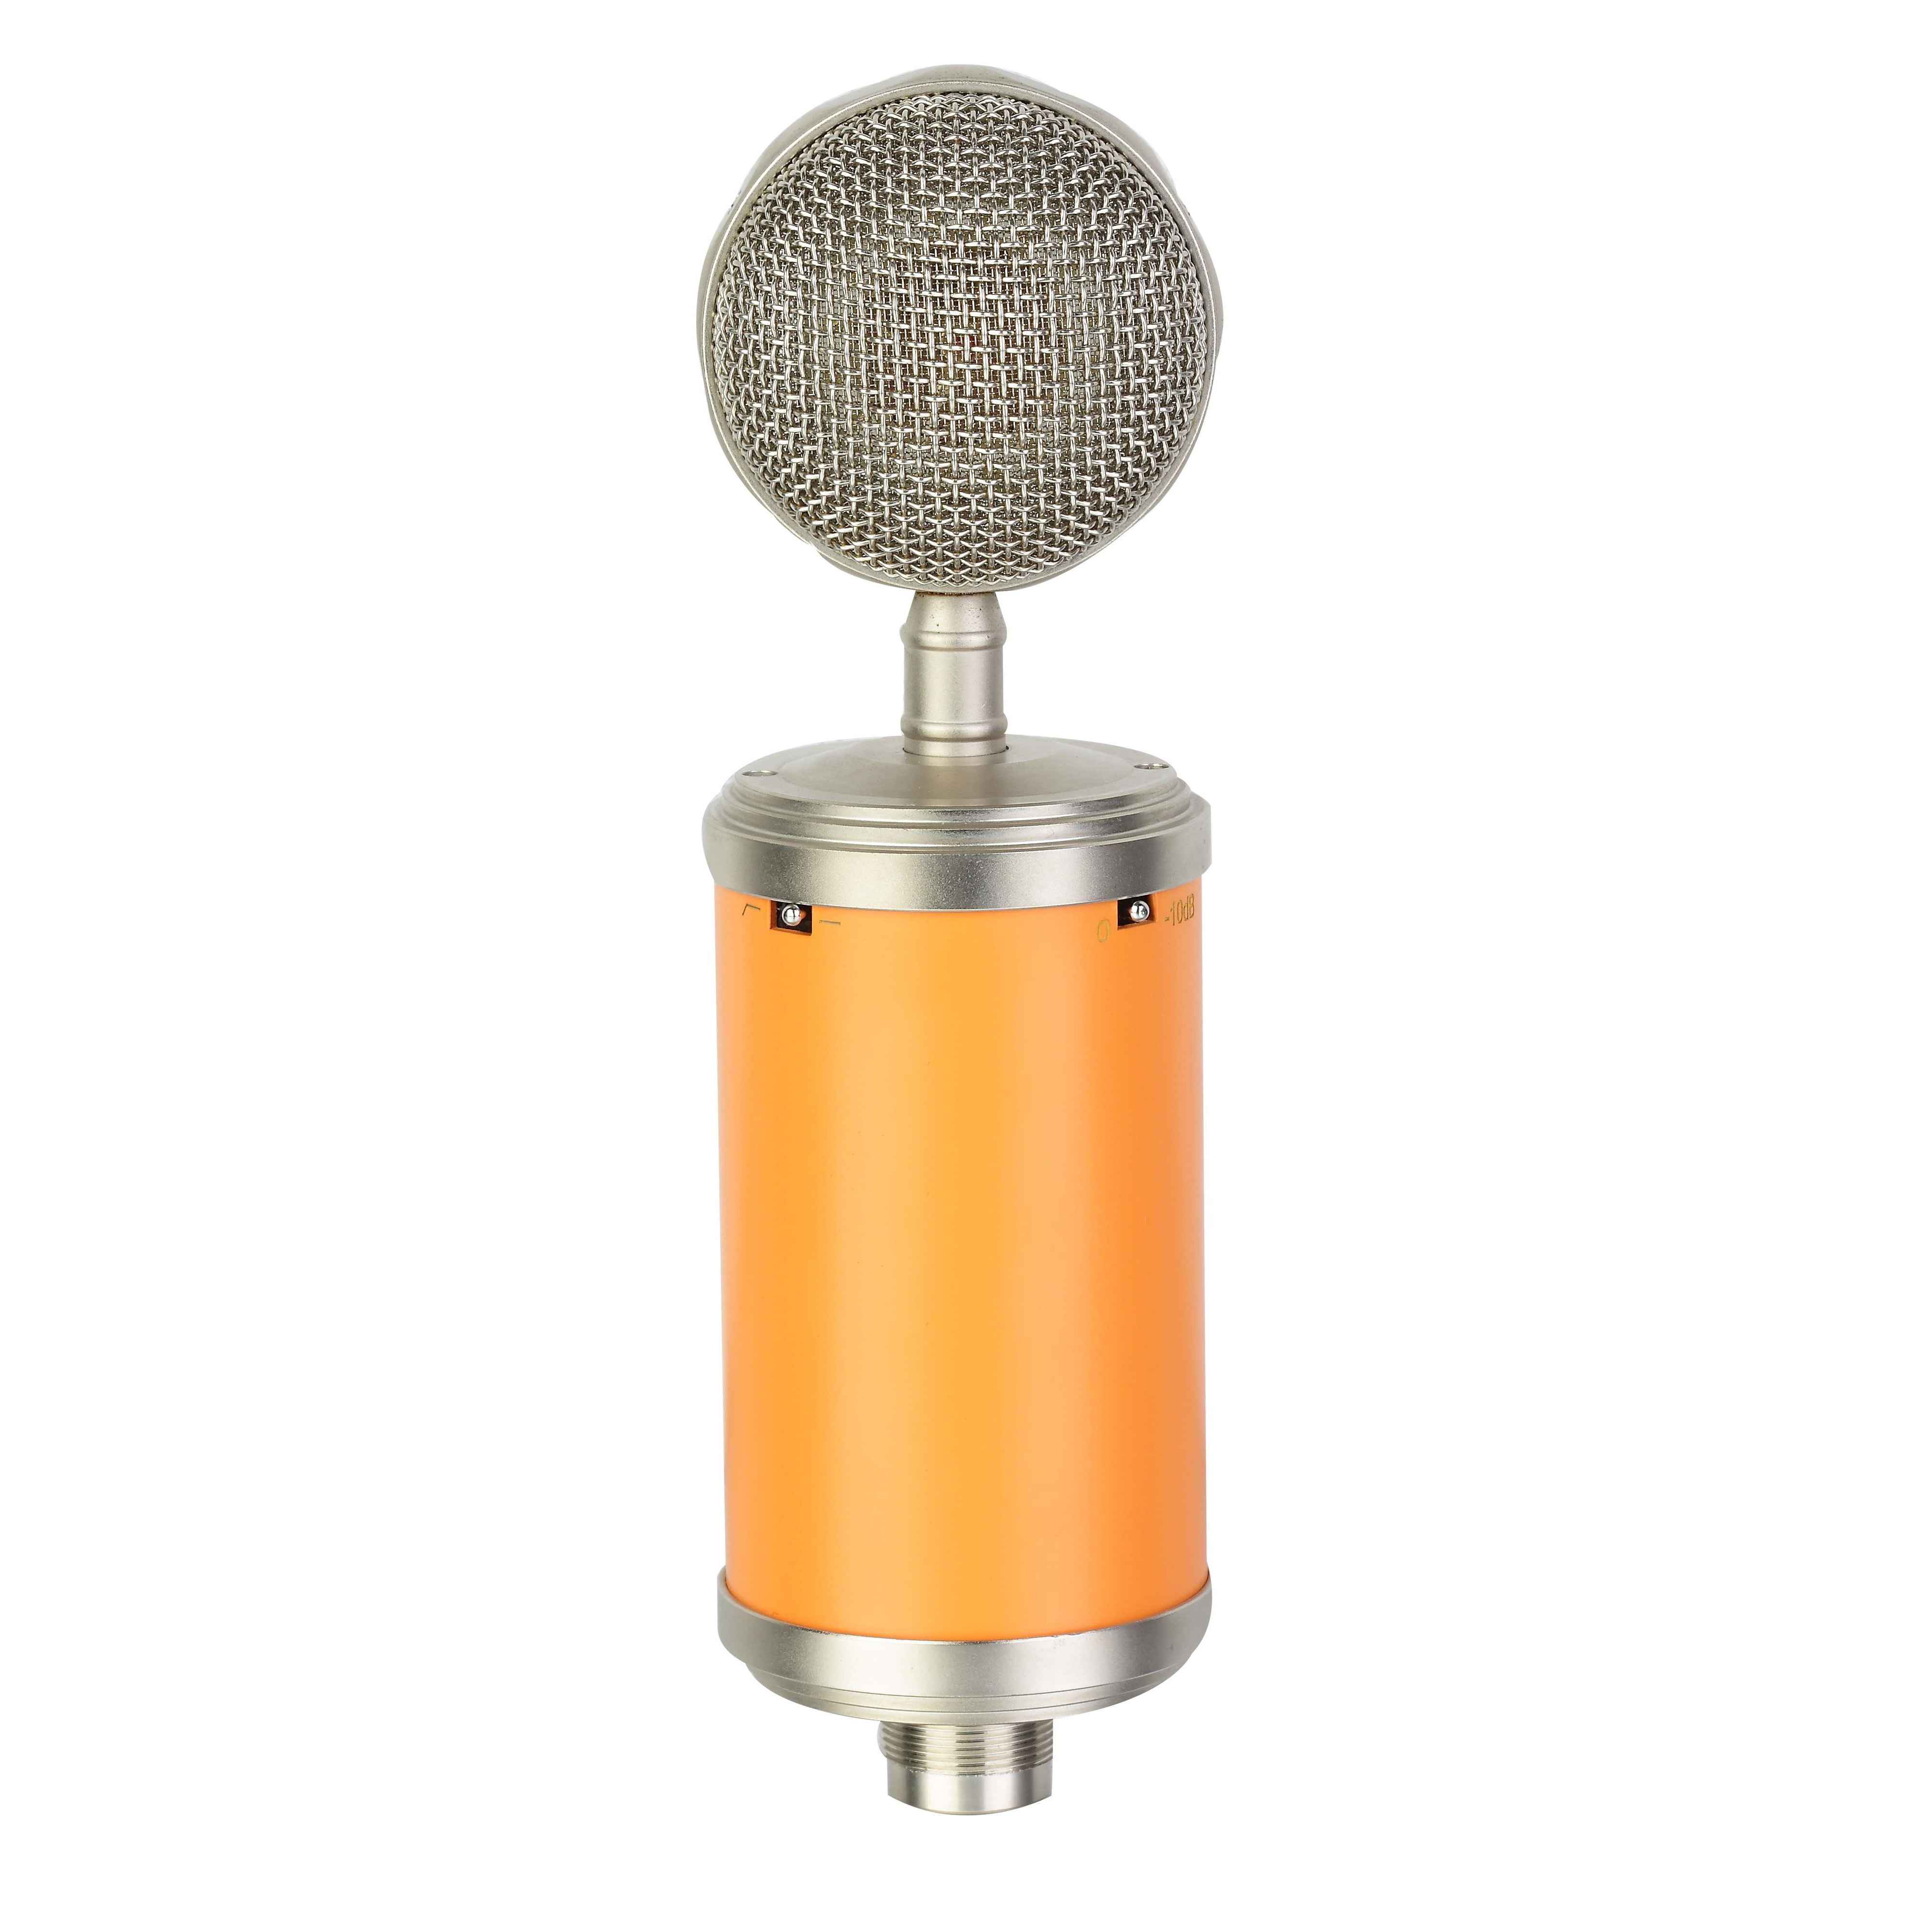 TCM002 Professional Tube Condenser Microphone